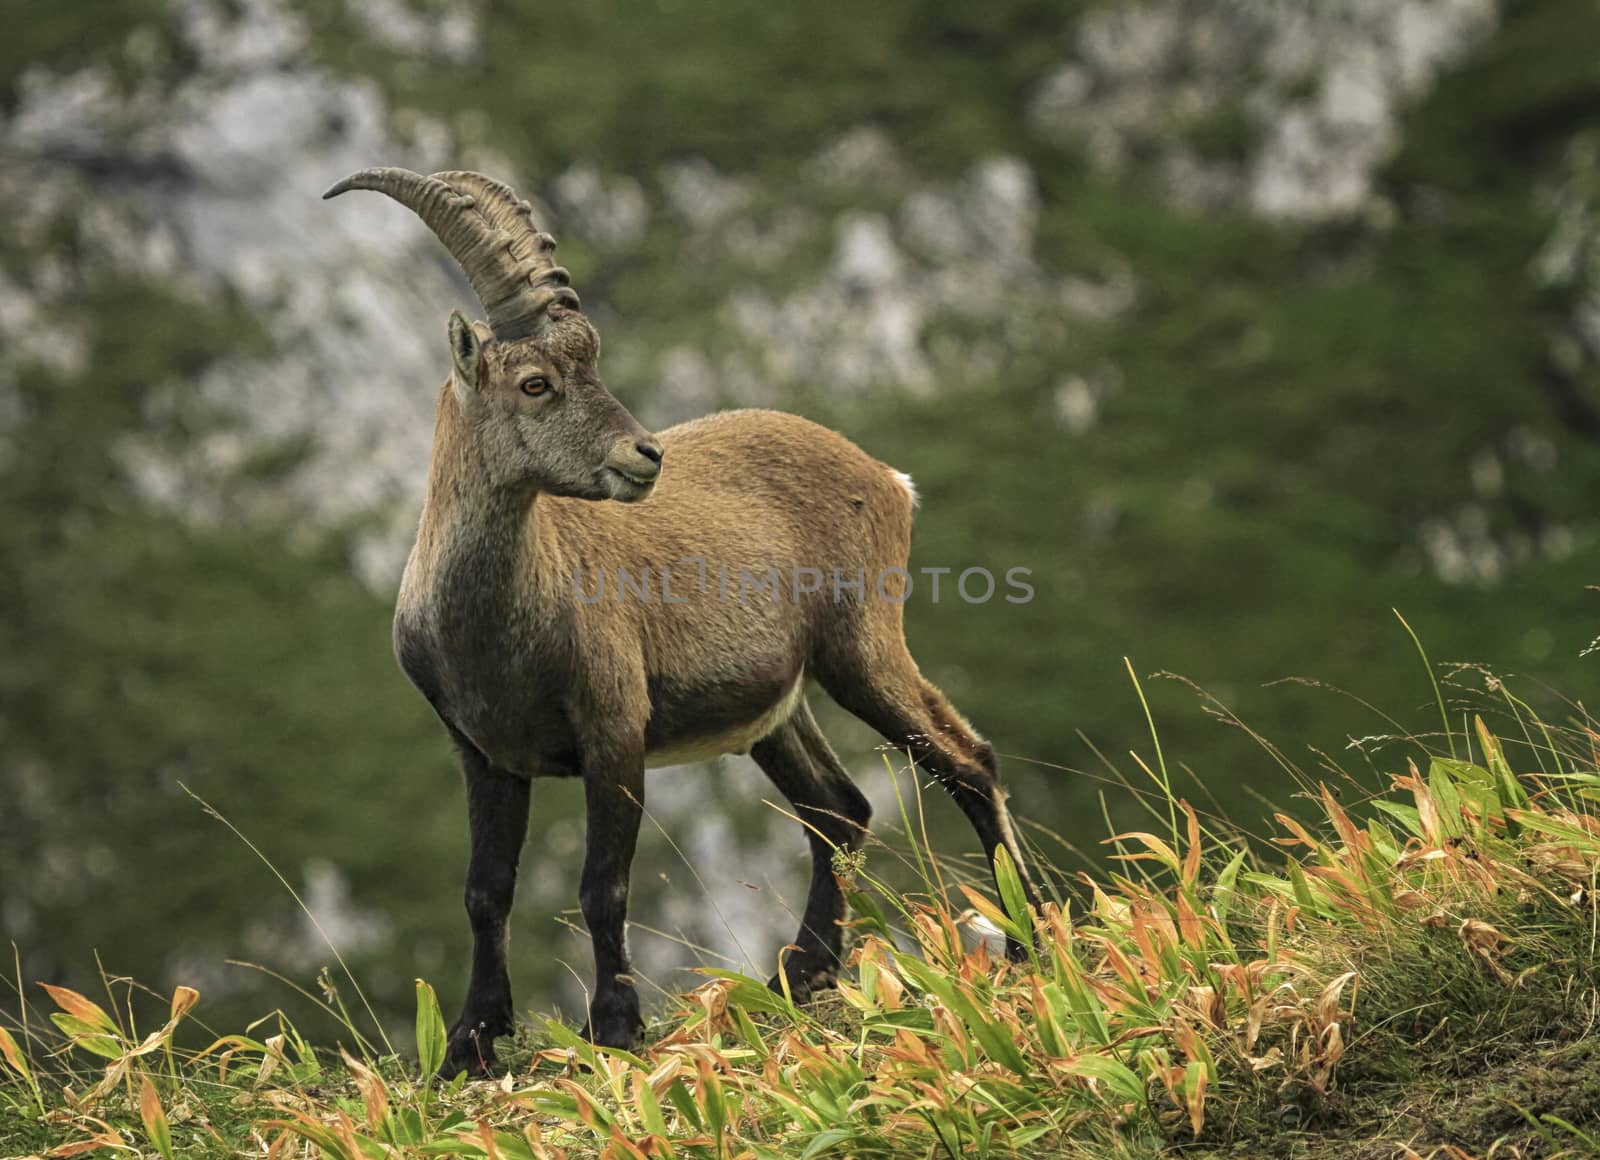 Male wild alpine ibex, capra ibex, or steinbock standing in Alps mountain, France